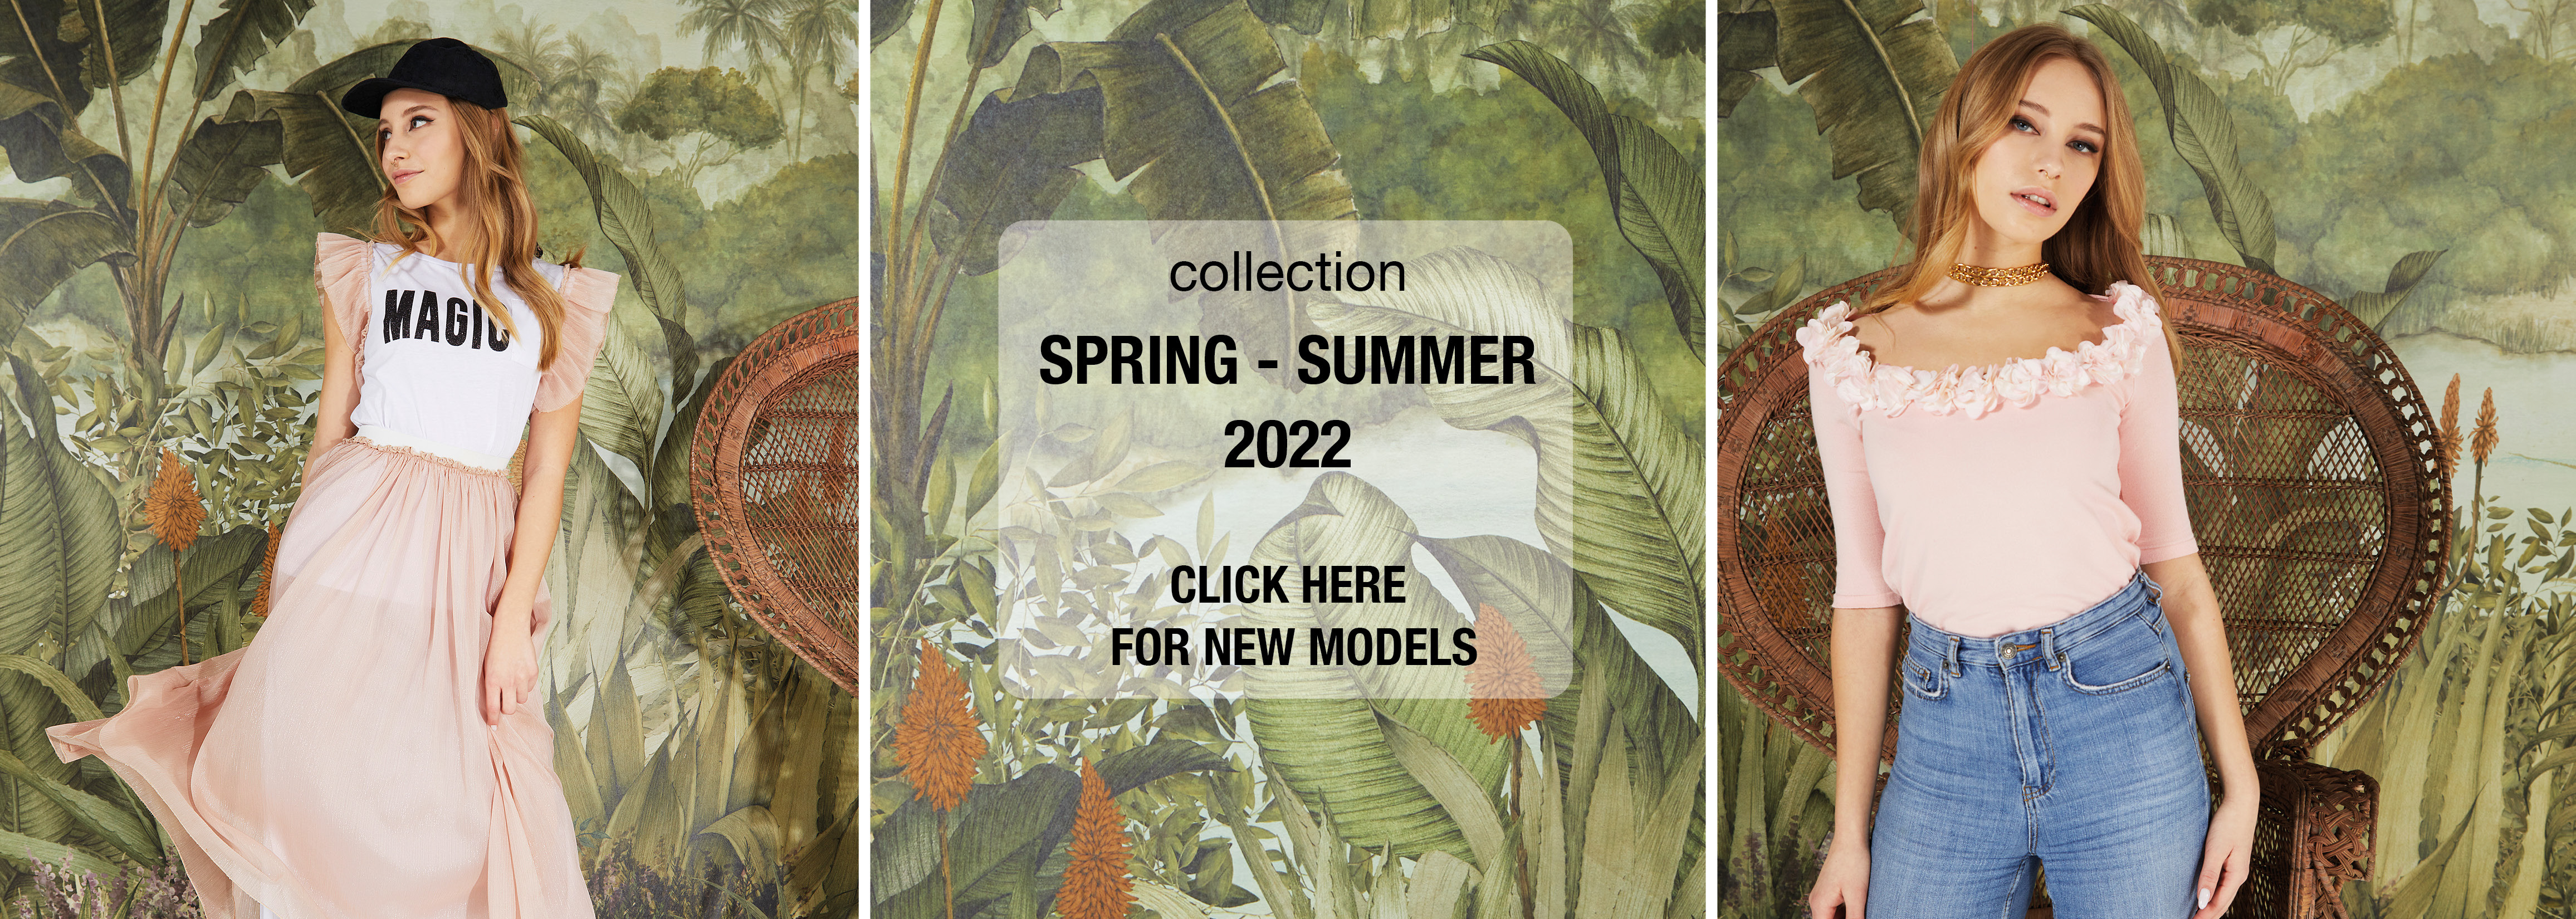 Mitika 2022 Spring Summer Collection slide 1